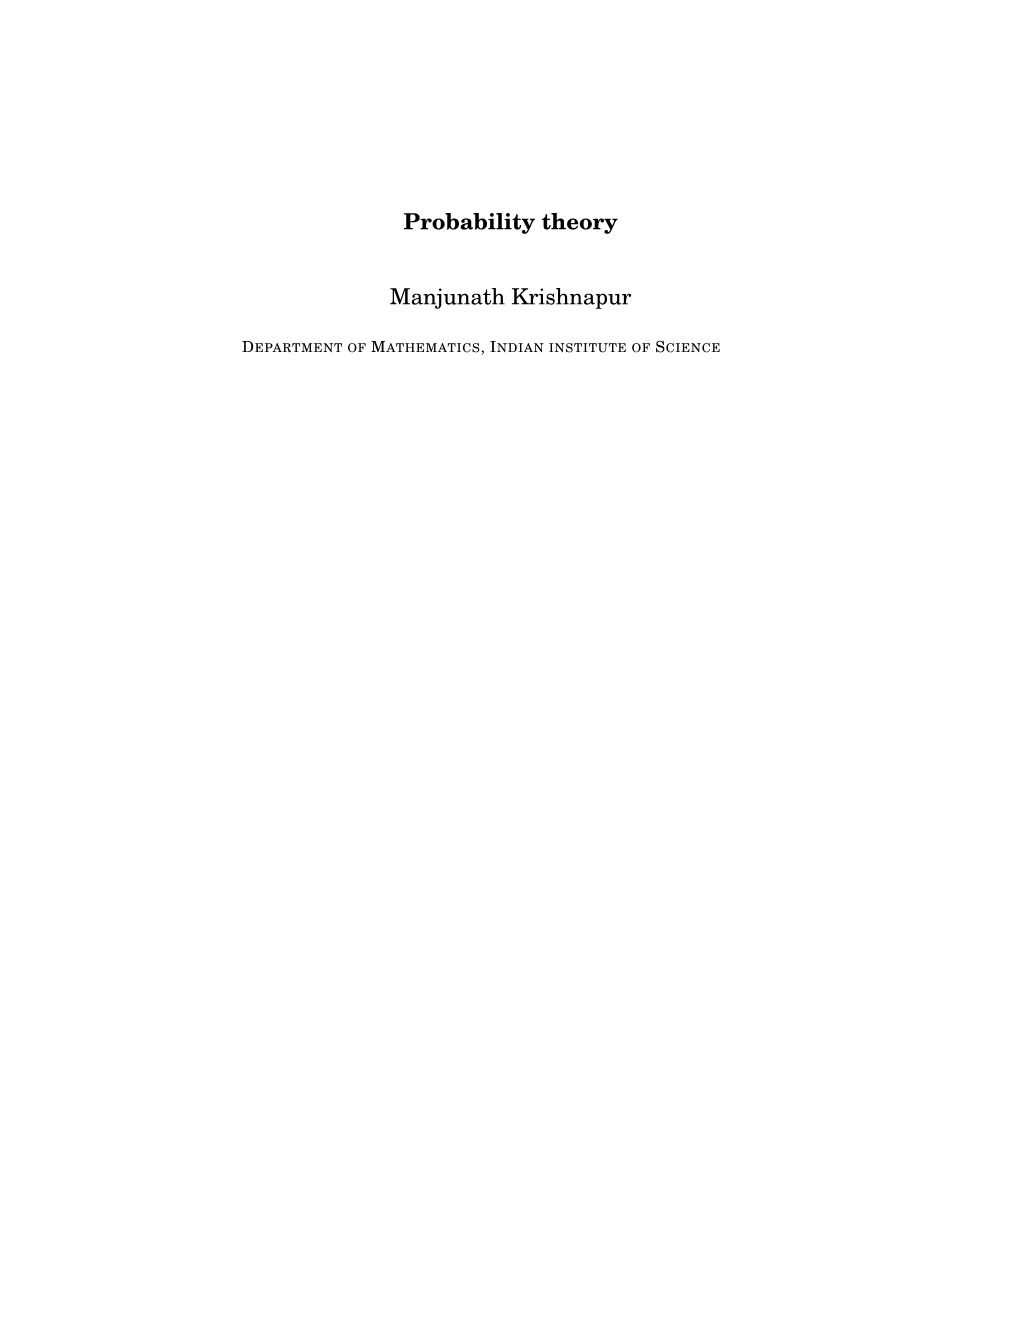 Probability Theory Manjunath Krishnapur